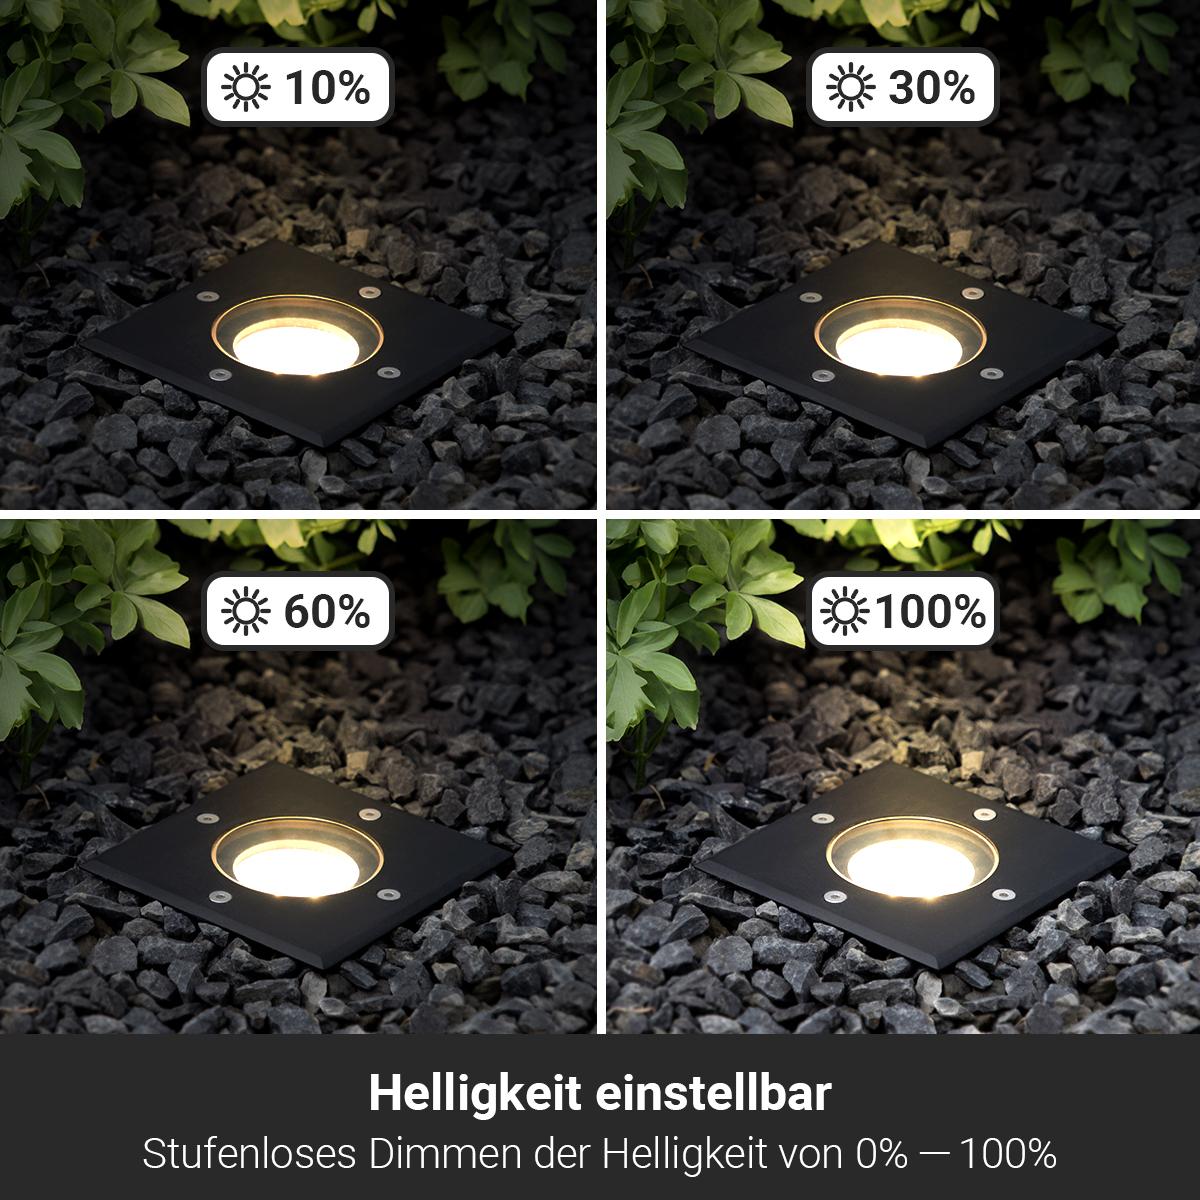 LED Bodeneinbaustrahler Schwarz eckig 230V IP67 - Leuchtmittel: GU10 RGB+CCT DIMMBAR inkl. Fernbedienung - Anzahl: 3x